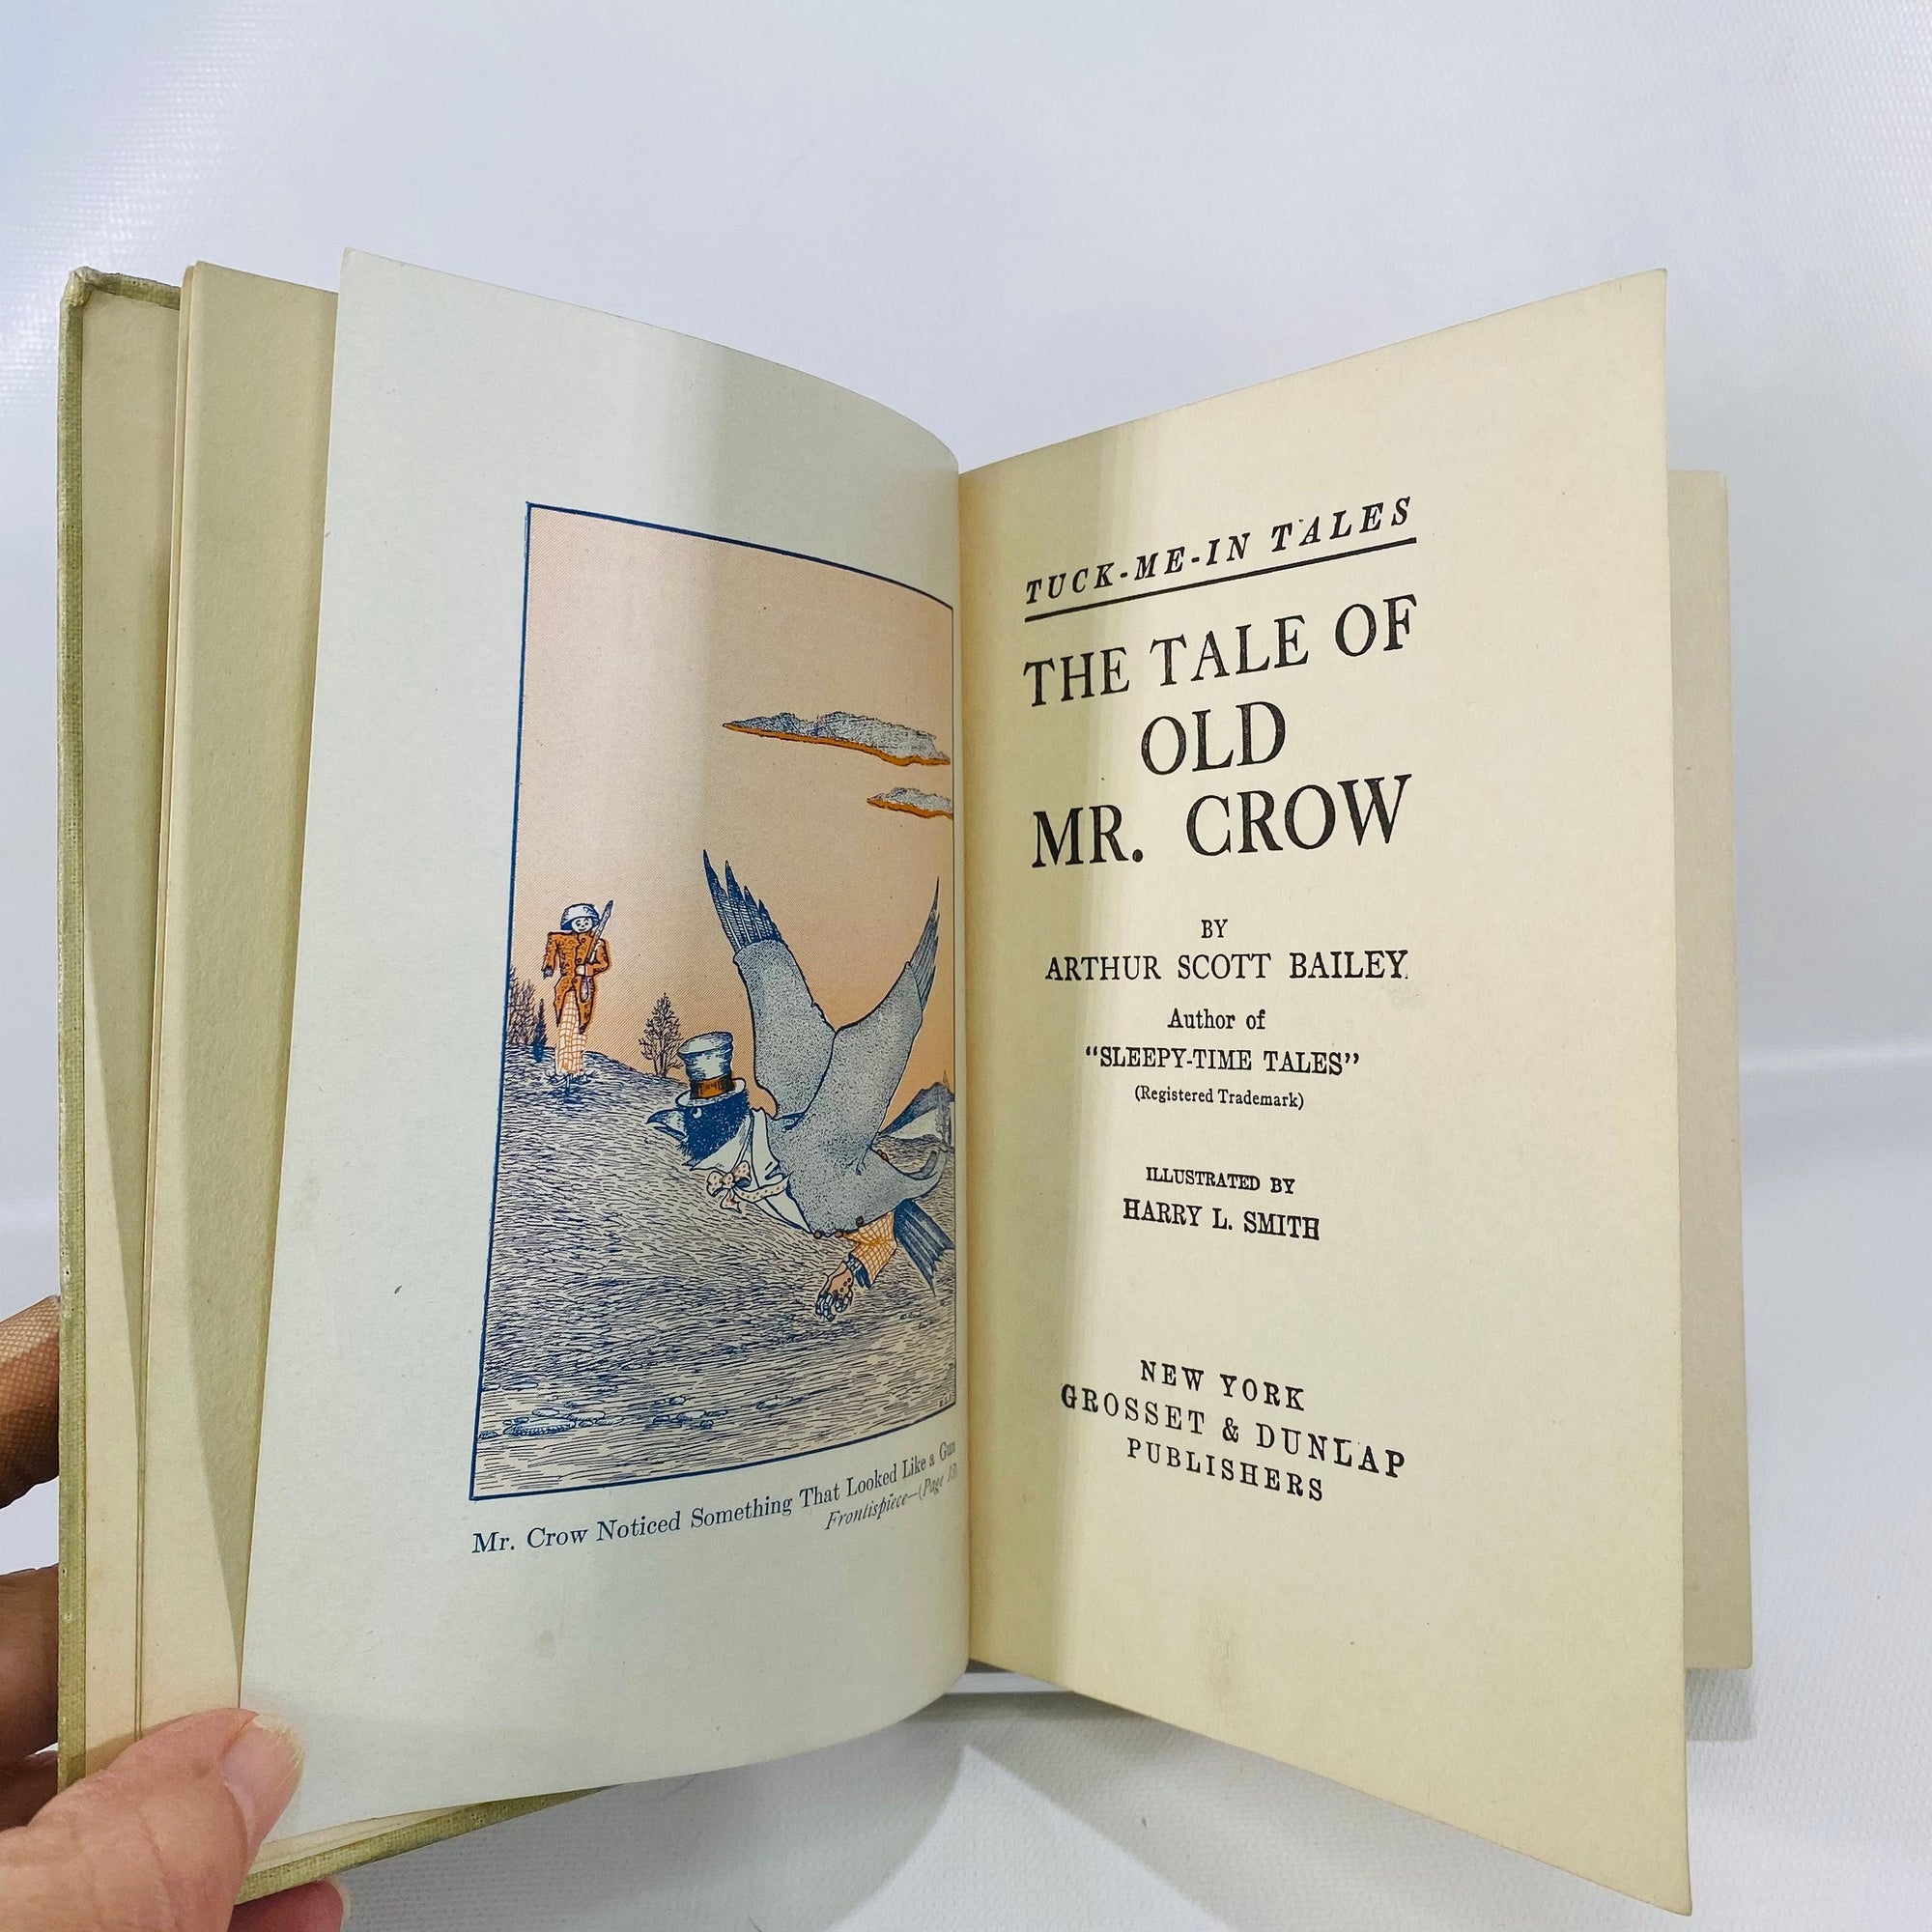 The Tale of Old Mr. Crow by Arthur Scott Bailey 1917 Grosset & Dunlap PublishersVintage Book